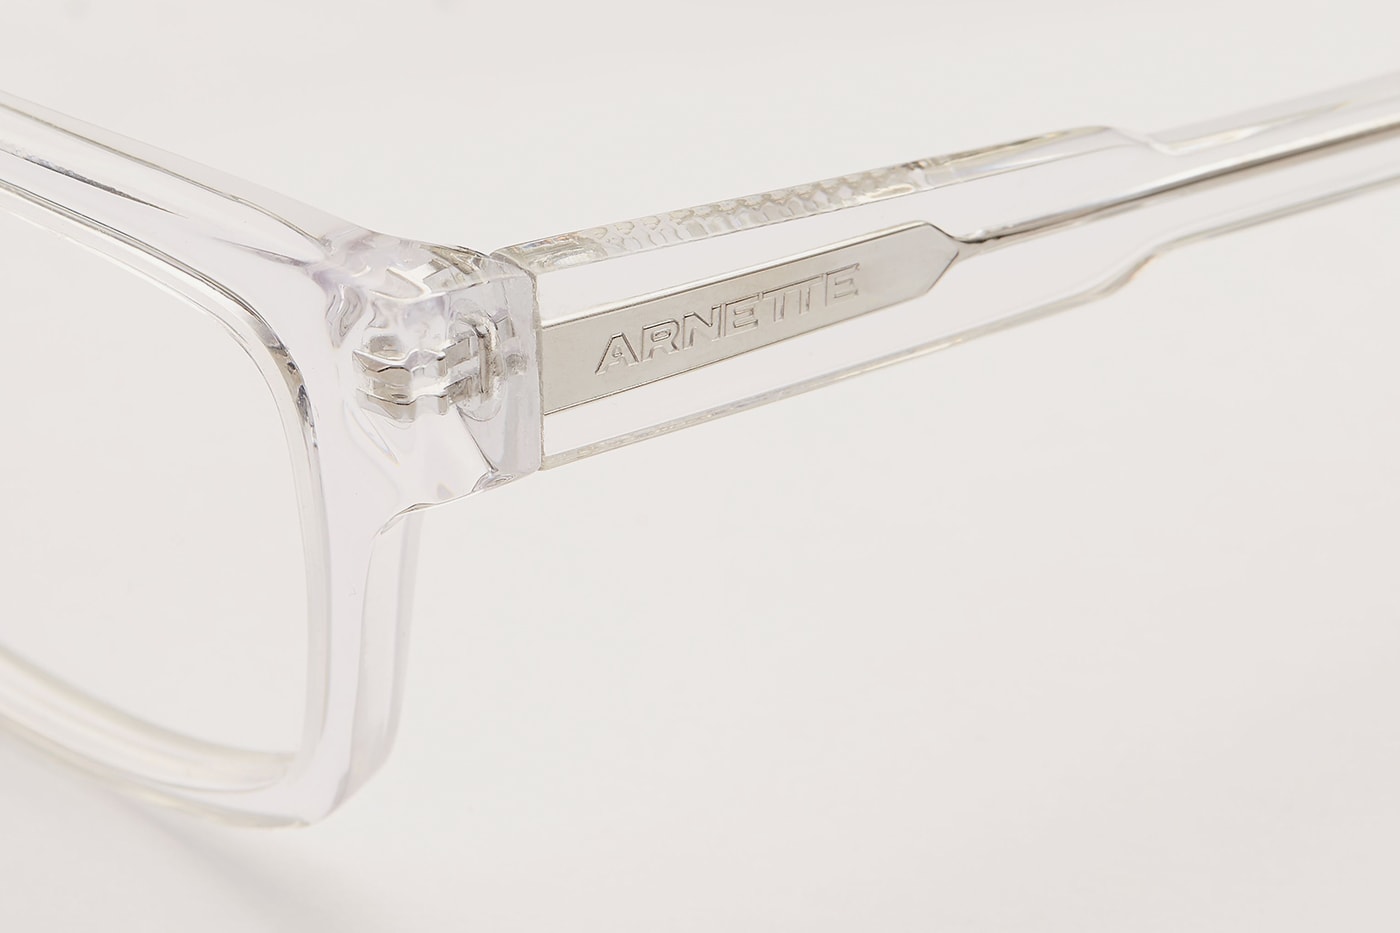 Post Malone Arnette 2020 Design Series Drop 3 Sunglasses Release Info Buy Price AN4279 AN7190 kokoro